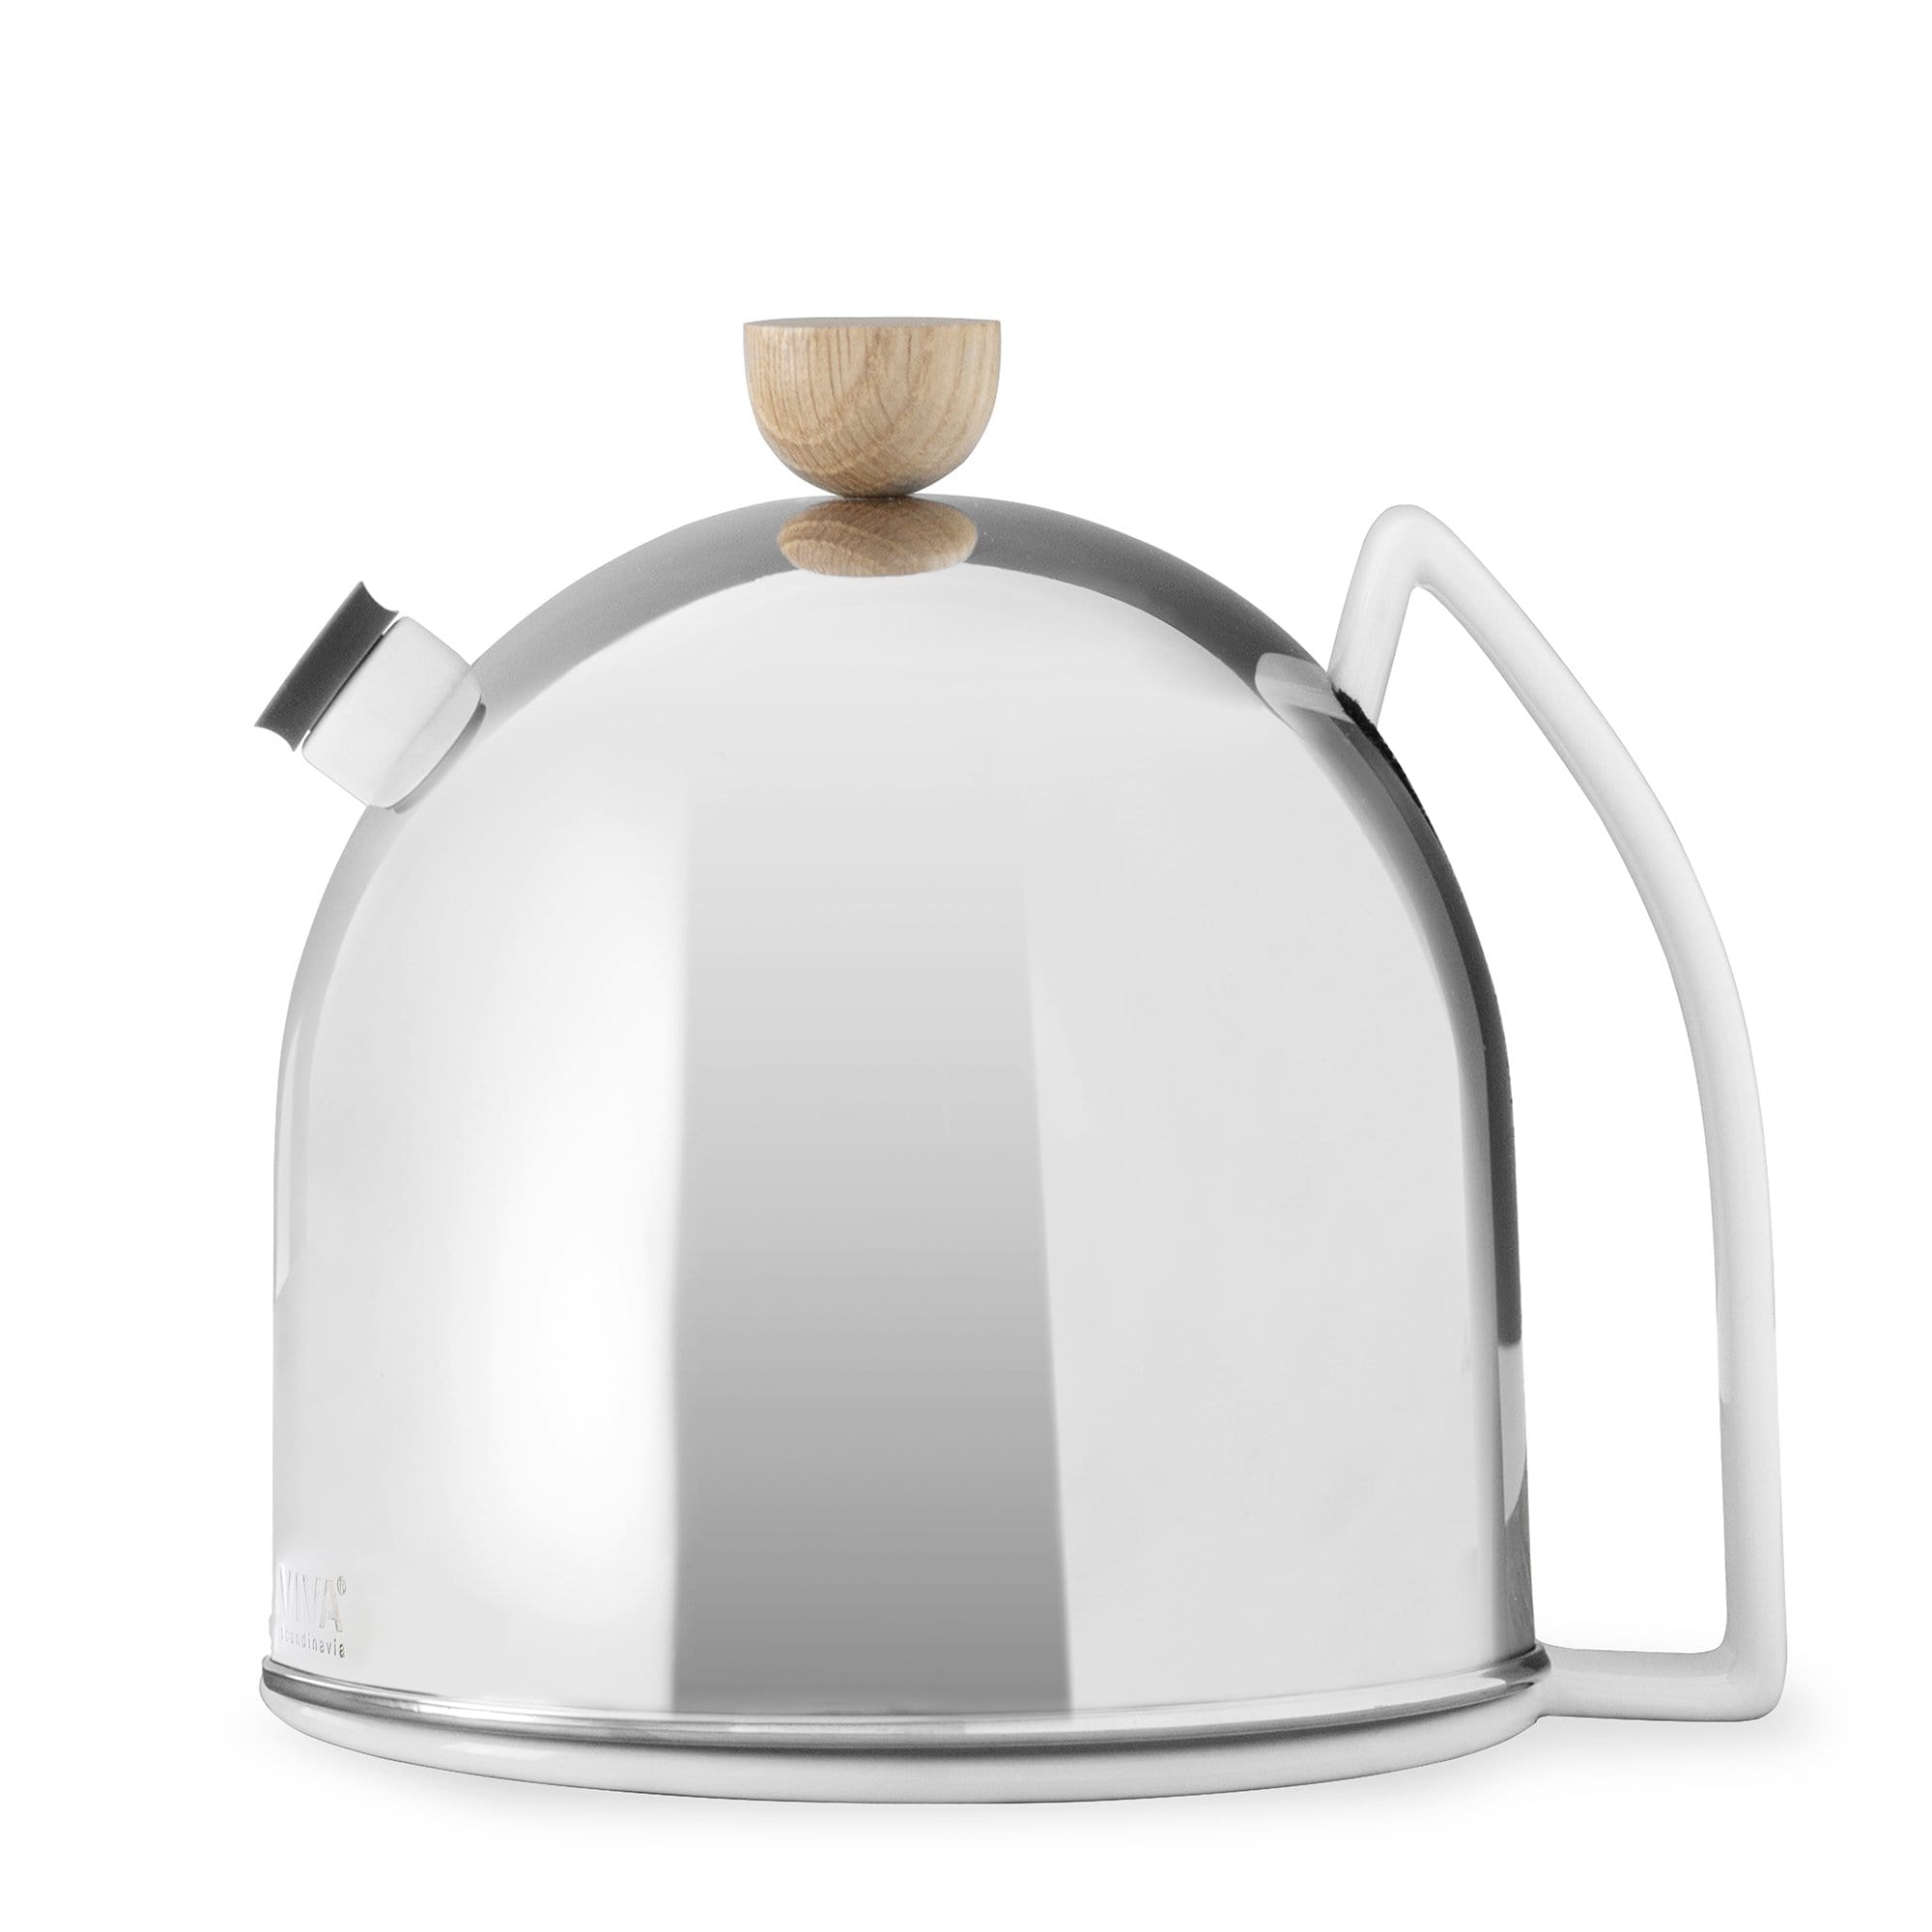 Thomas™ teapot large Teapots VIVA Scandinavia 